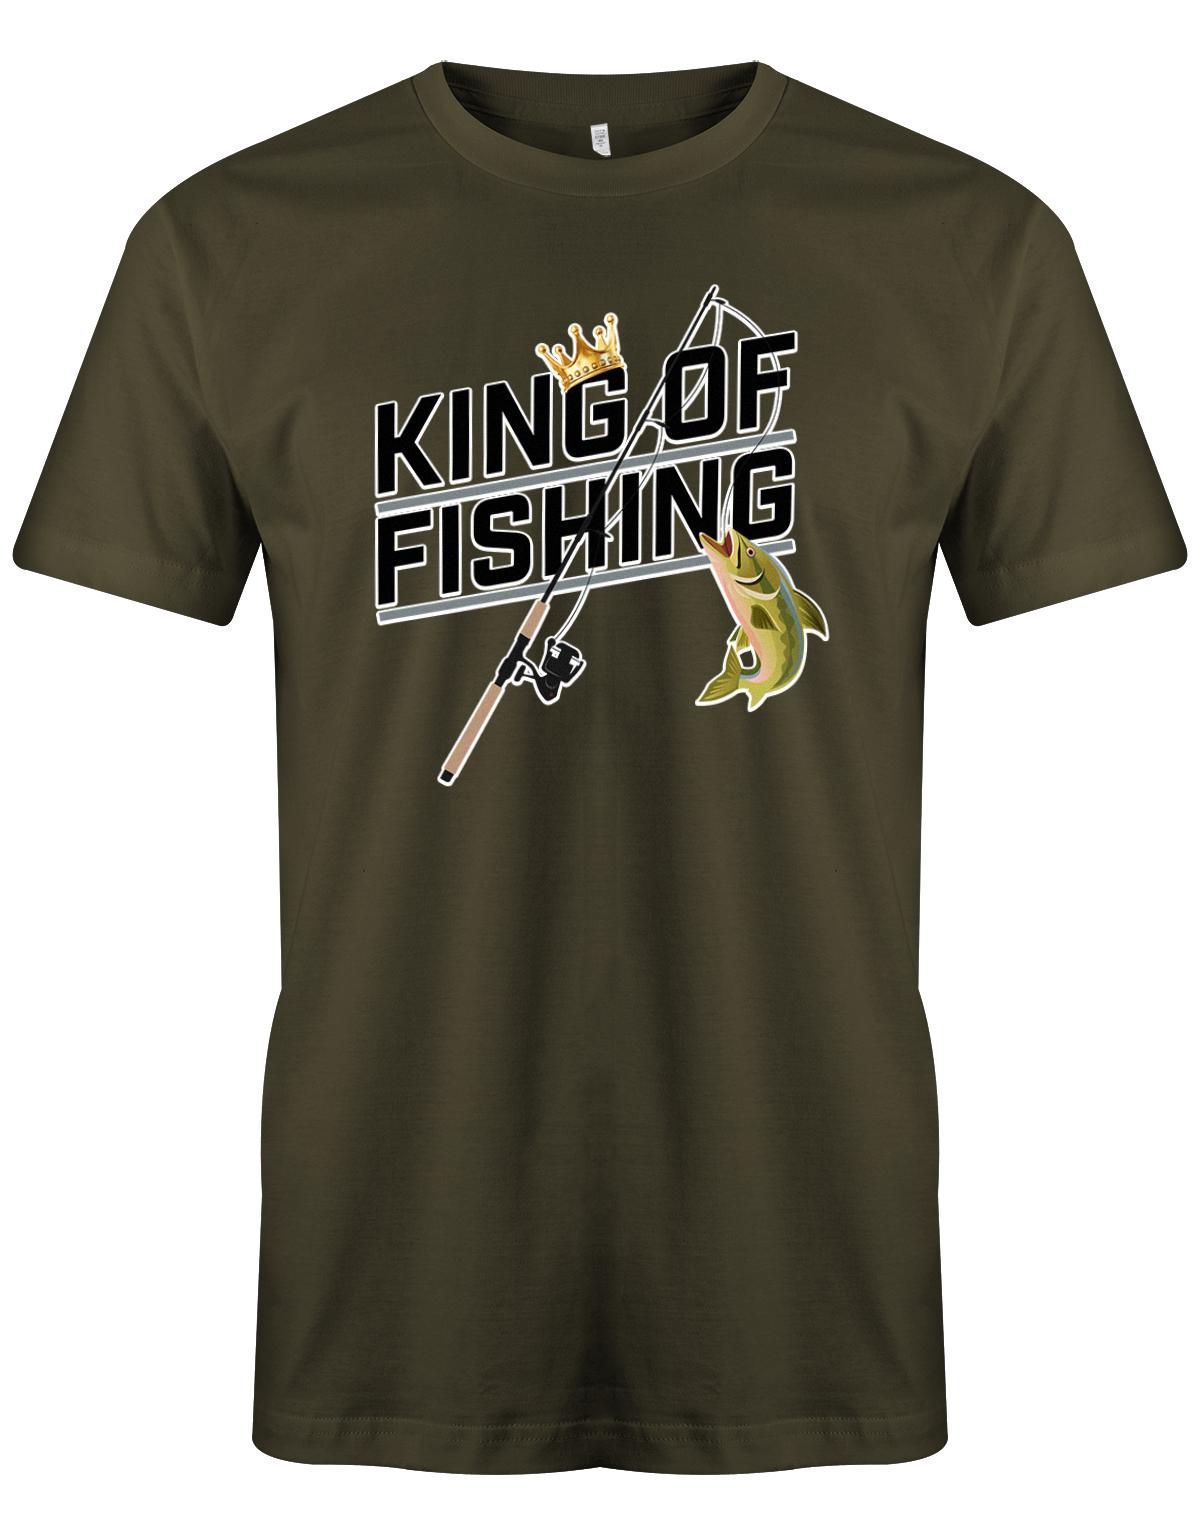 King-of-Fishing-Herren-Shirt-Army